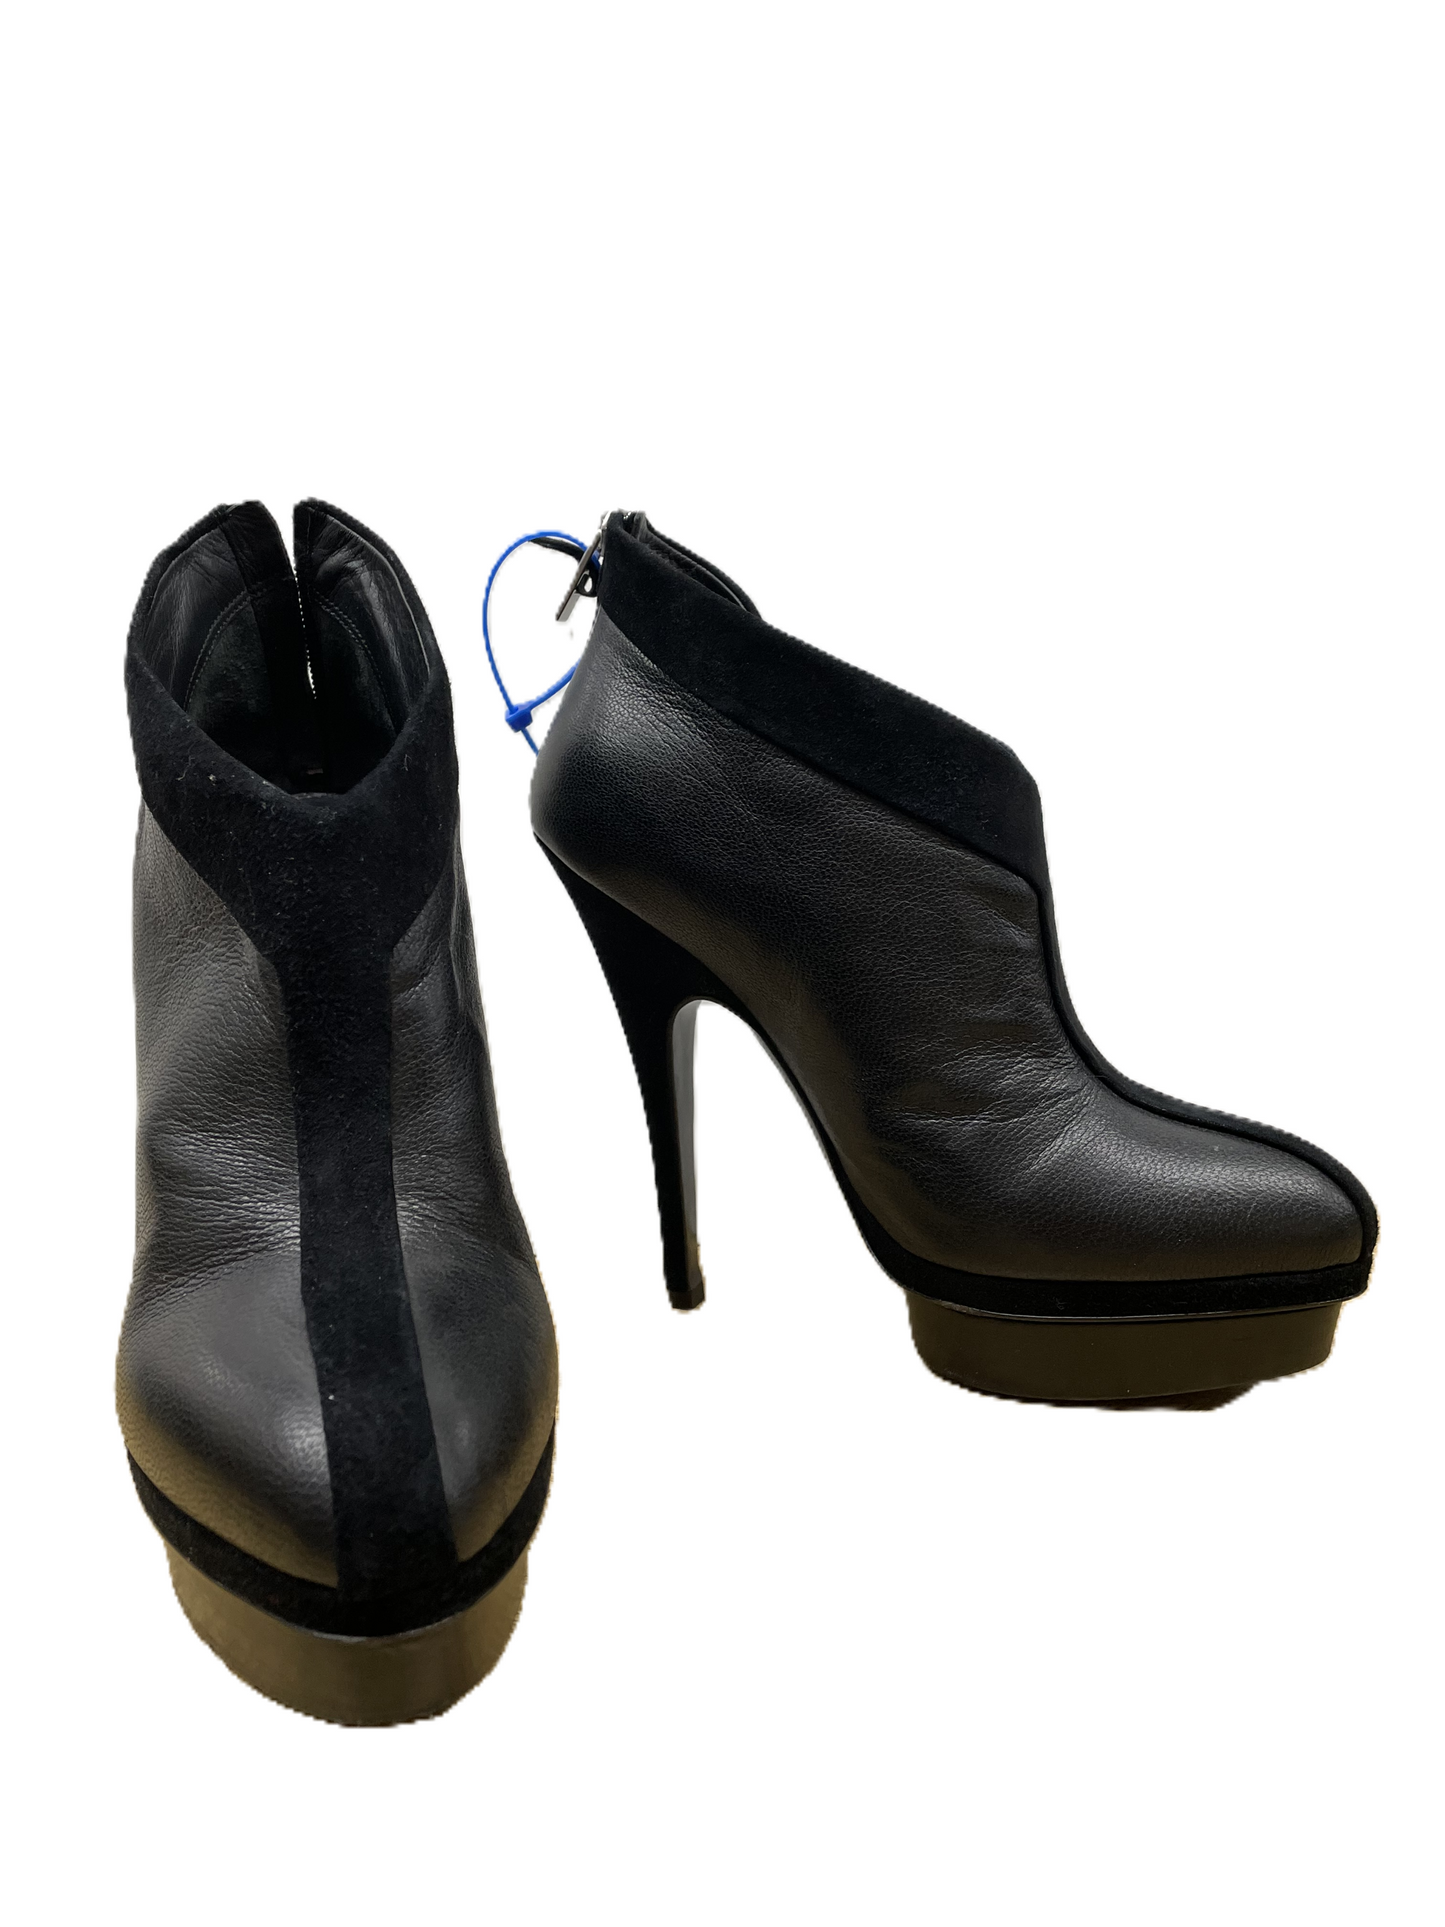 Boots Luxury Designer By Yves Saint Laurent  Size: 9